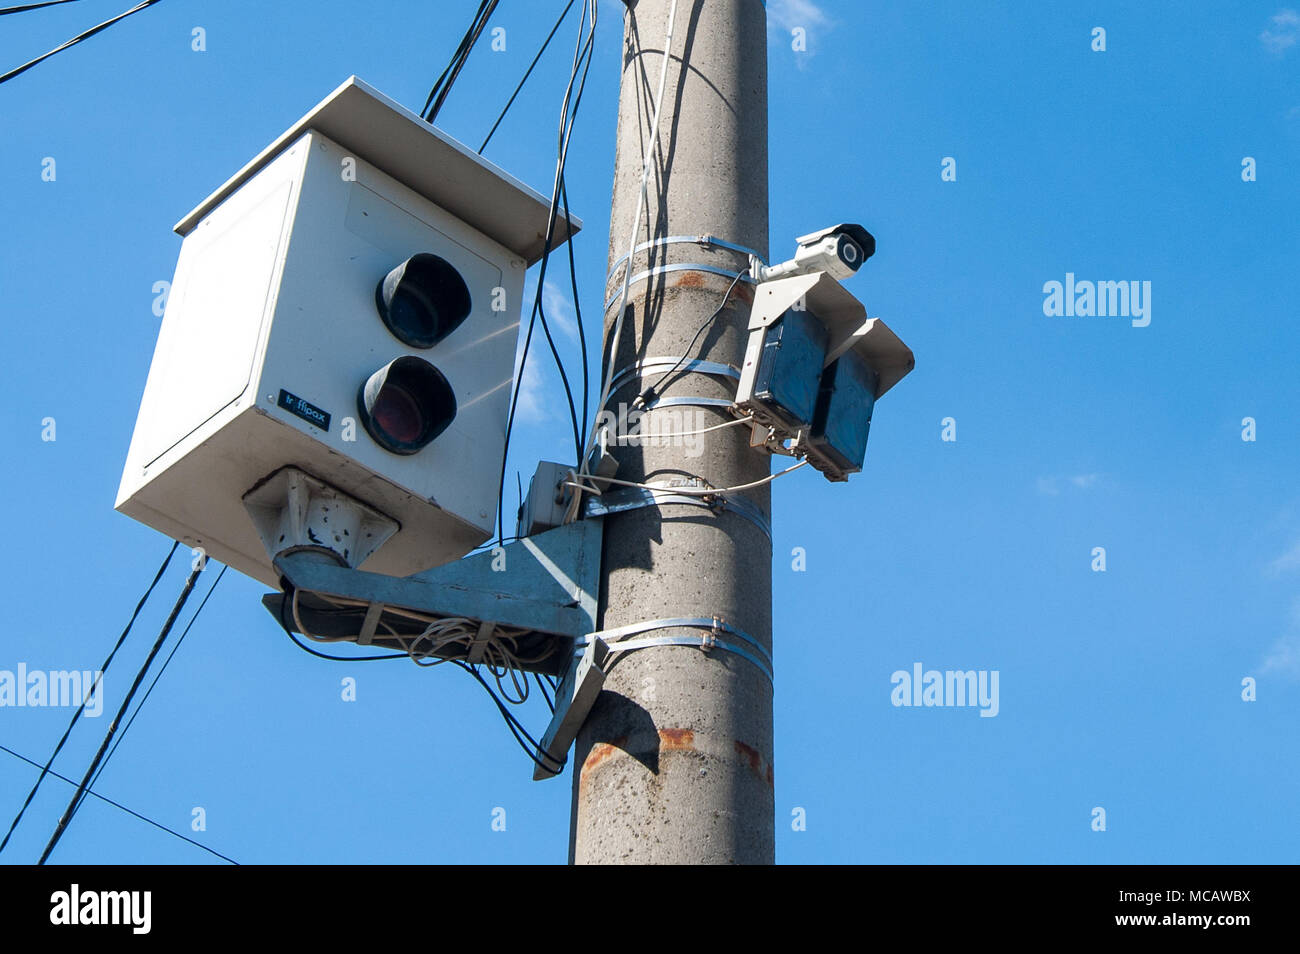 Tambov, Tambov region, Russia. 15th Apr, 2018. The cameras and radar fixing violations of traffic rules in Russia Credit: Aleksei Sukhorukov/ZUMA Wire/Alamy Live News Stock Photo